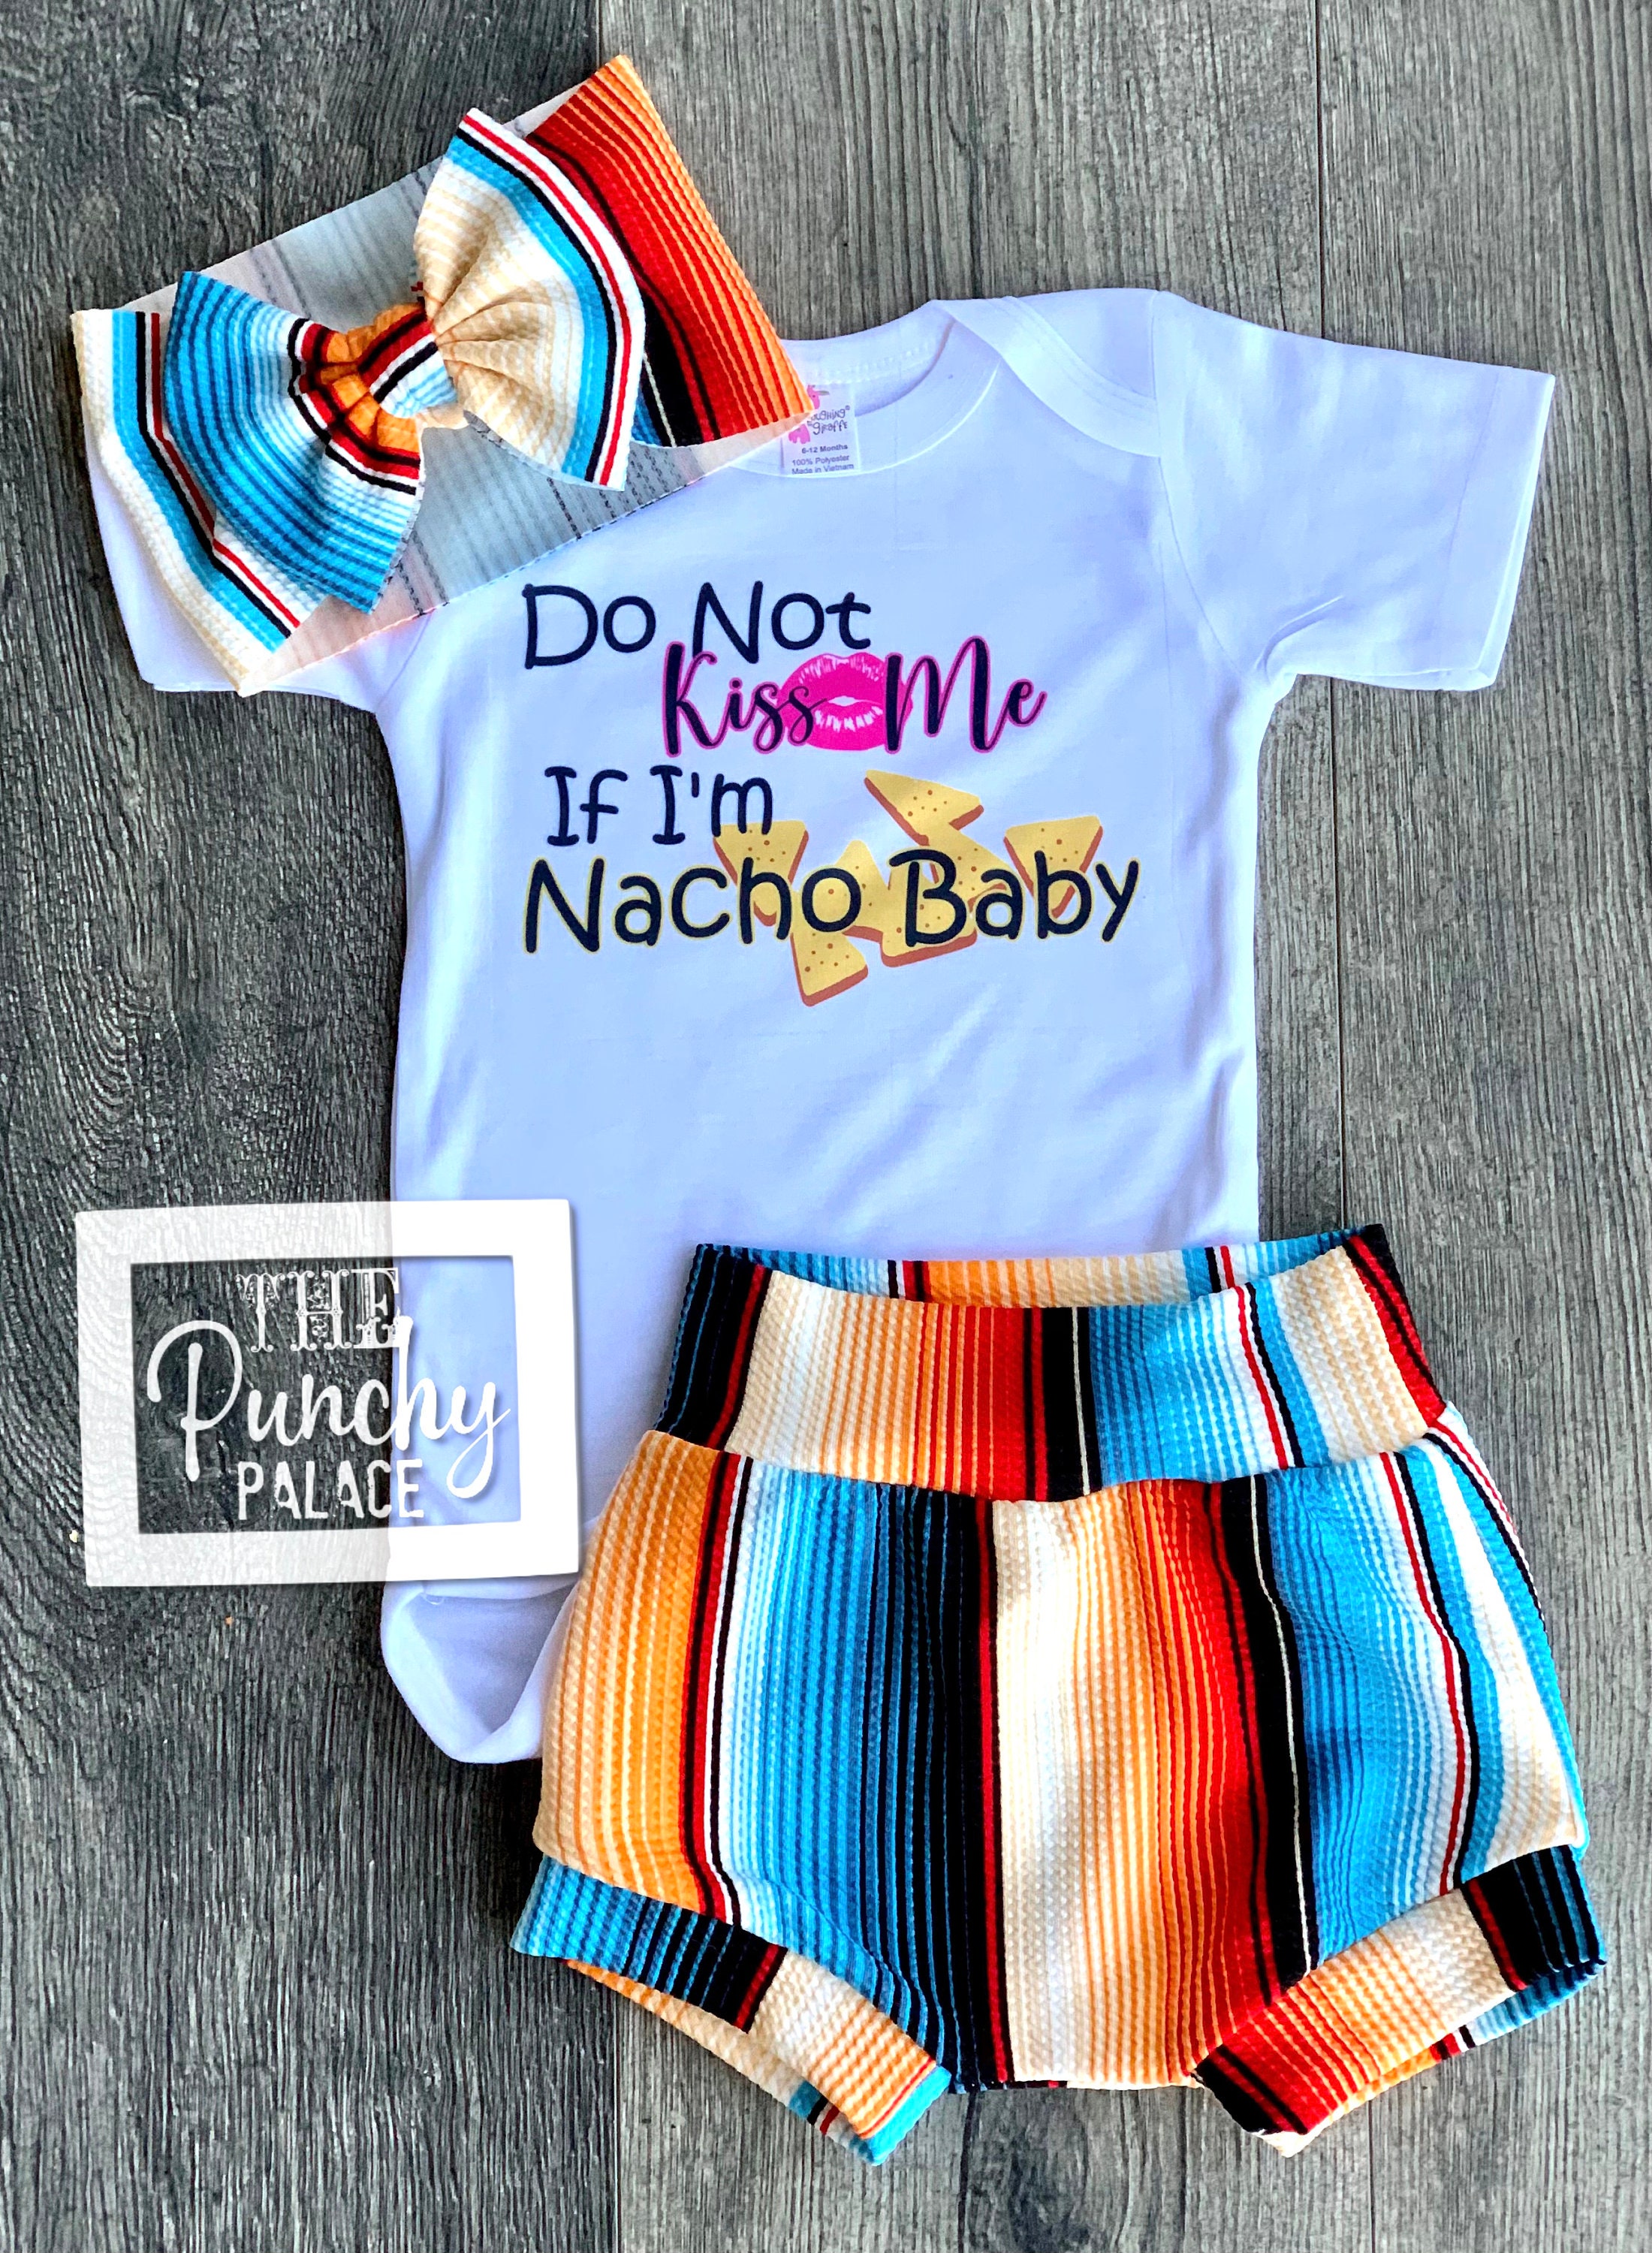 Designer Baby Clothes 